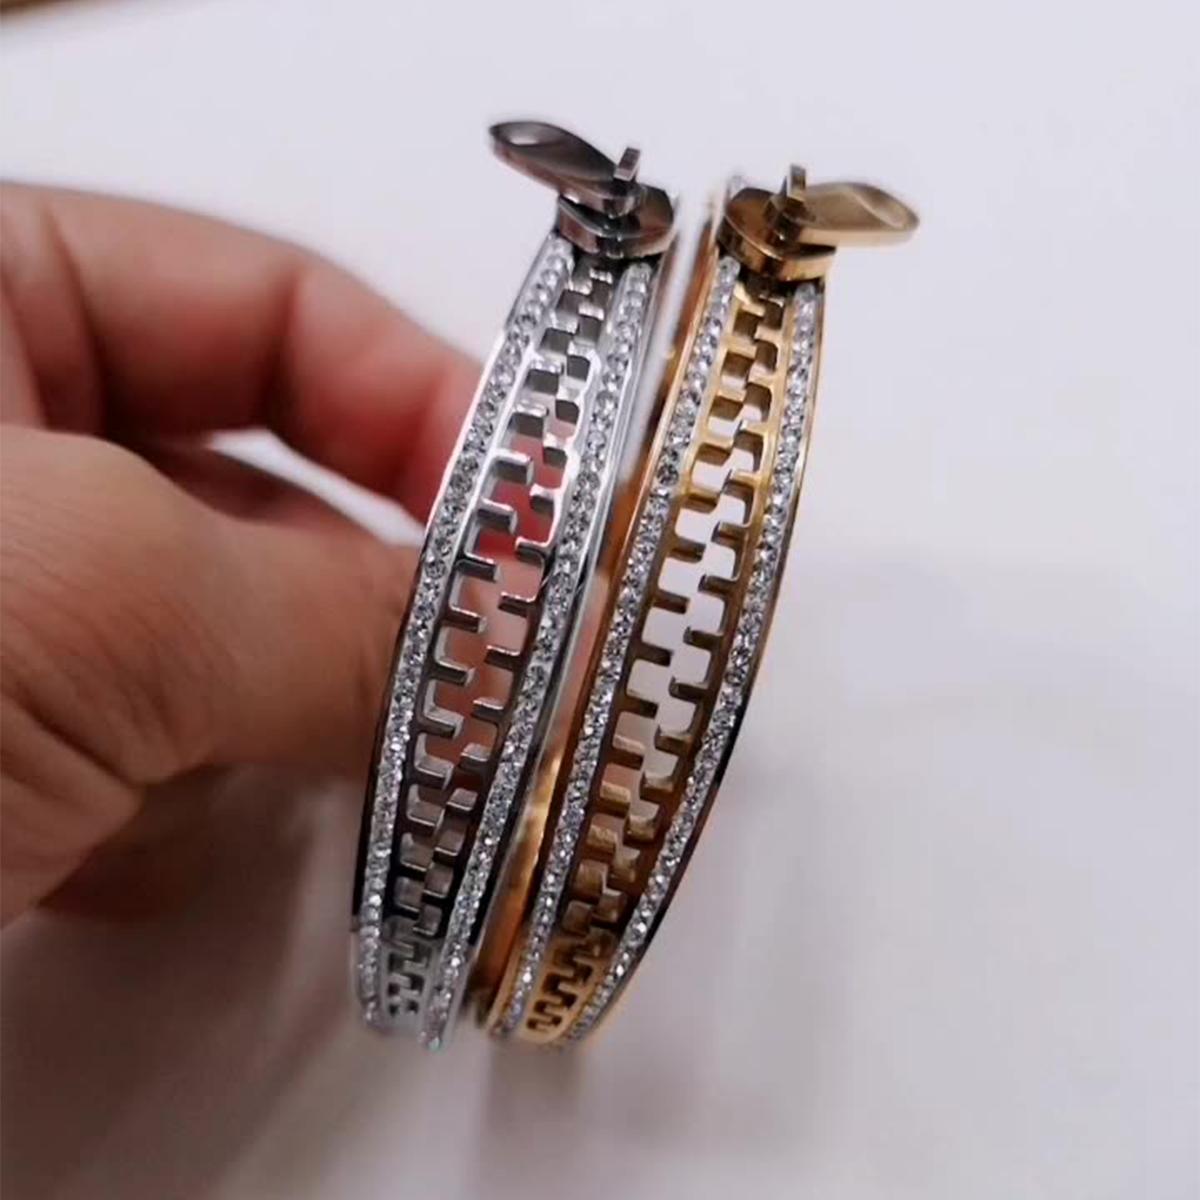 Non-fading Cross-border hot style zipper bracelet